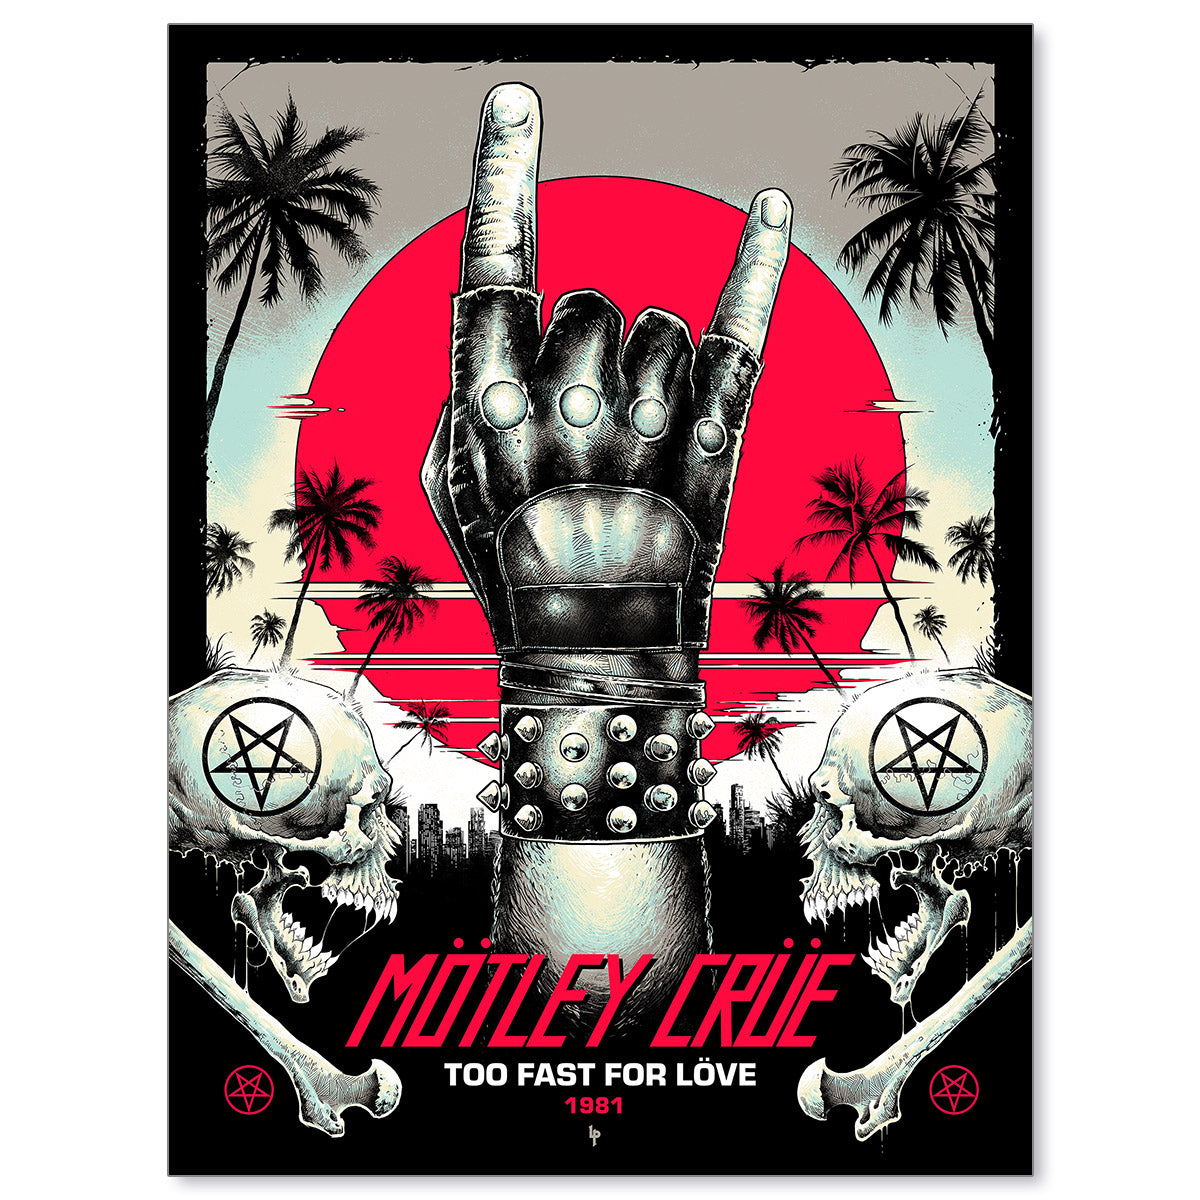 Mötley Crüe Too Fast For Love by Luke Preece (Main Edition)